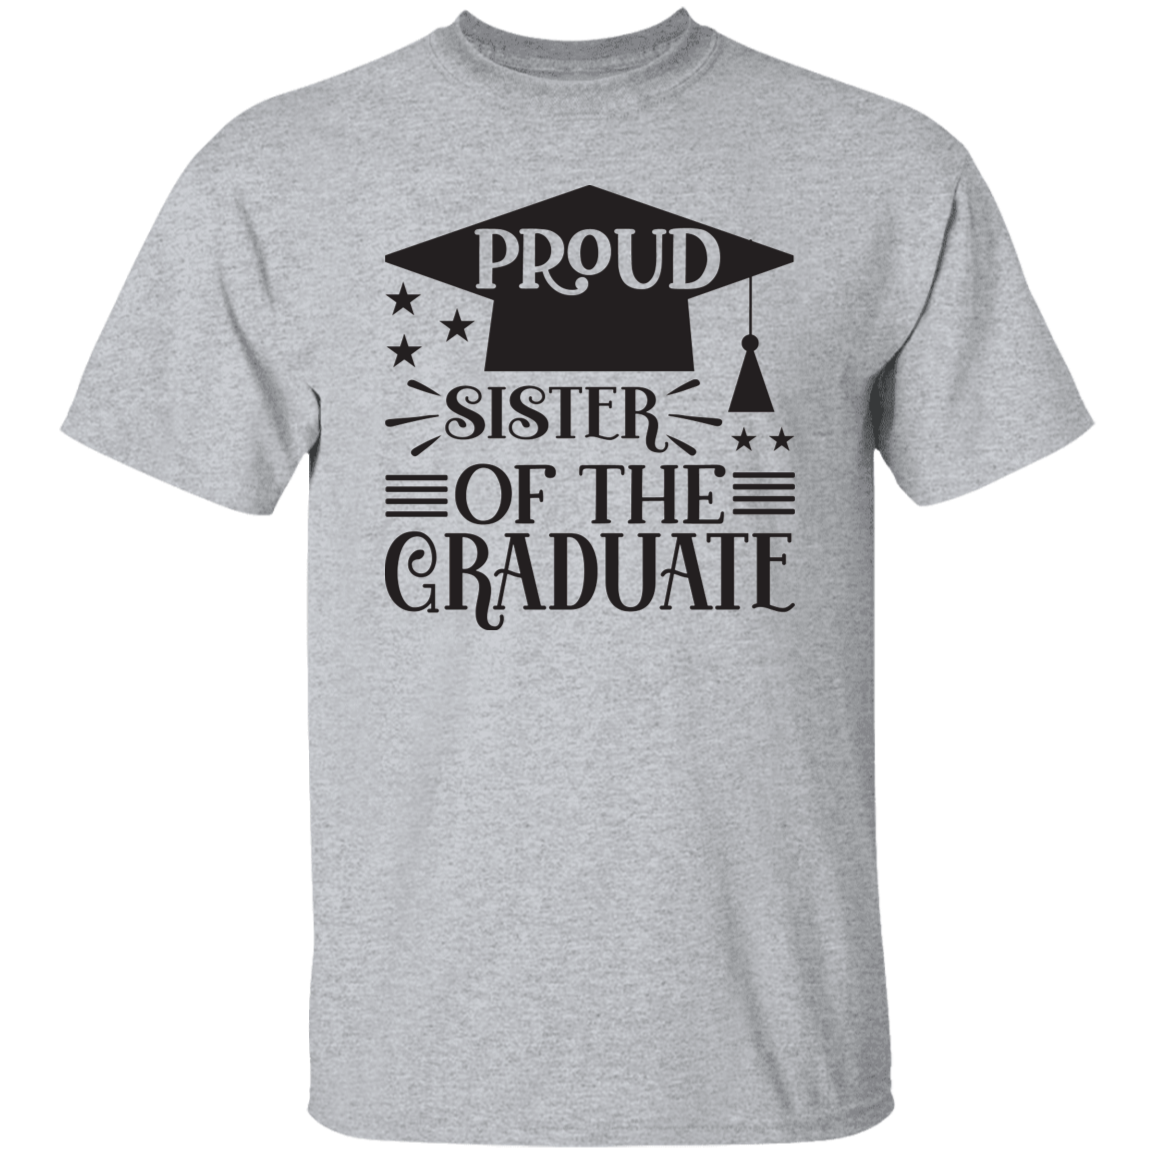 Proud Graduate of the Sister 5.3 oz. T-Shirt